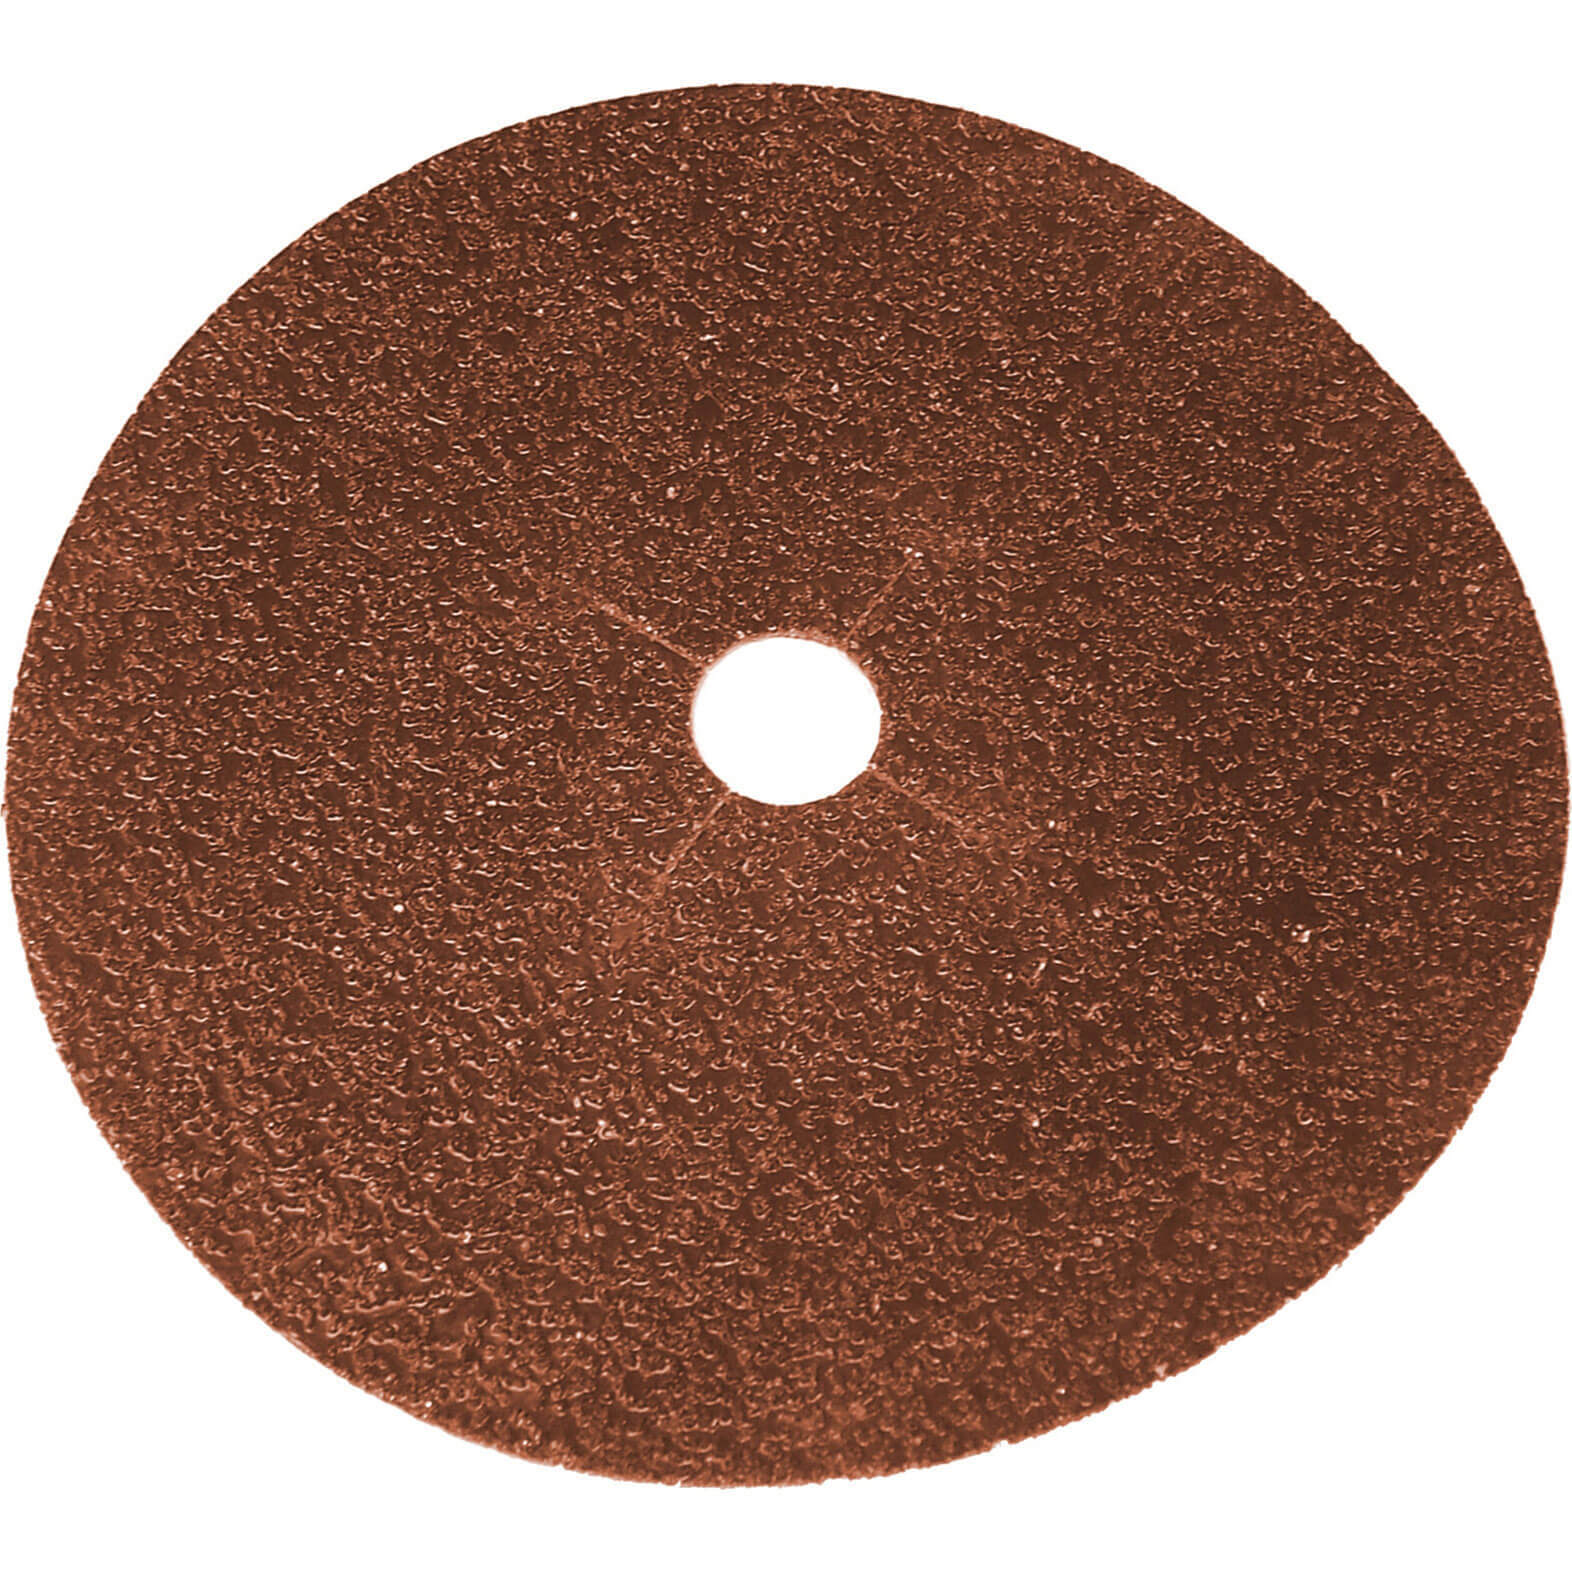 Photo of Faithfull Aluminium Oxide Sanding Discs 178mm 60g